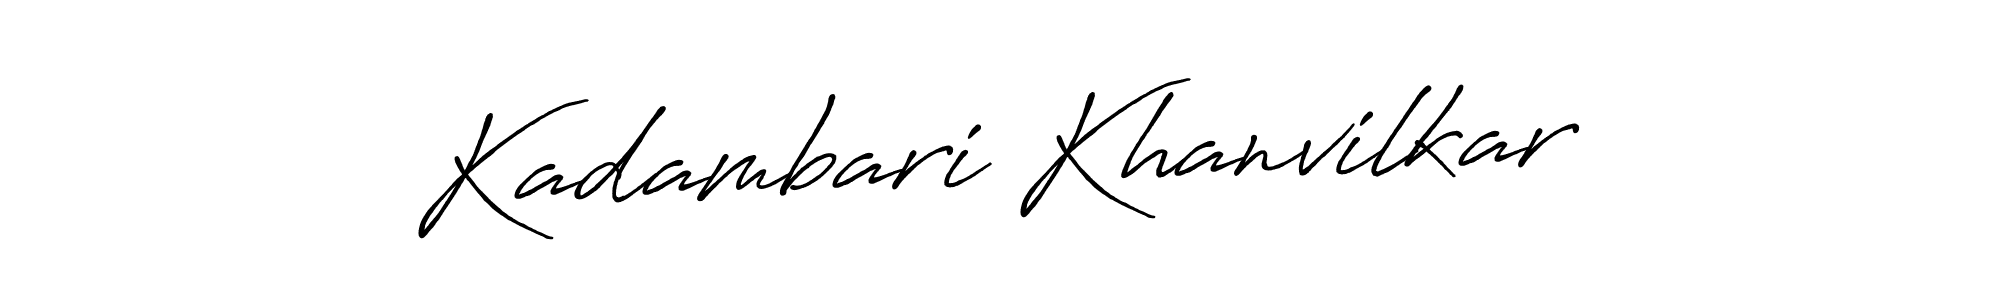 How to Draw Kadambari Khanvilkar signature style? Antro_Vectra_Bolder is a latest design signature styles for name Kadambari Khanvilkar. Kadambari Khanvilkar signature style 7 images and pictures png